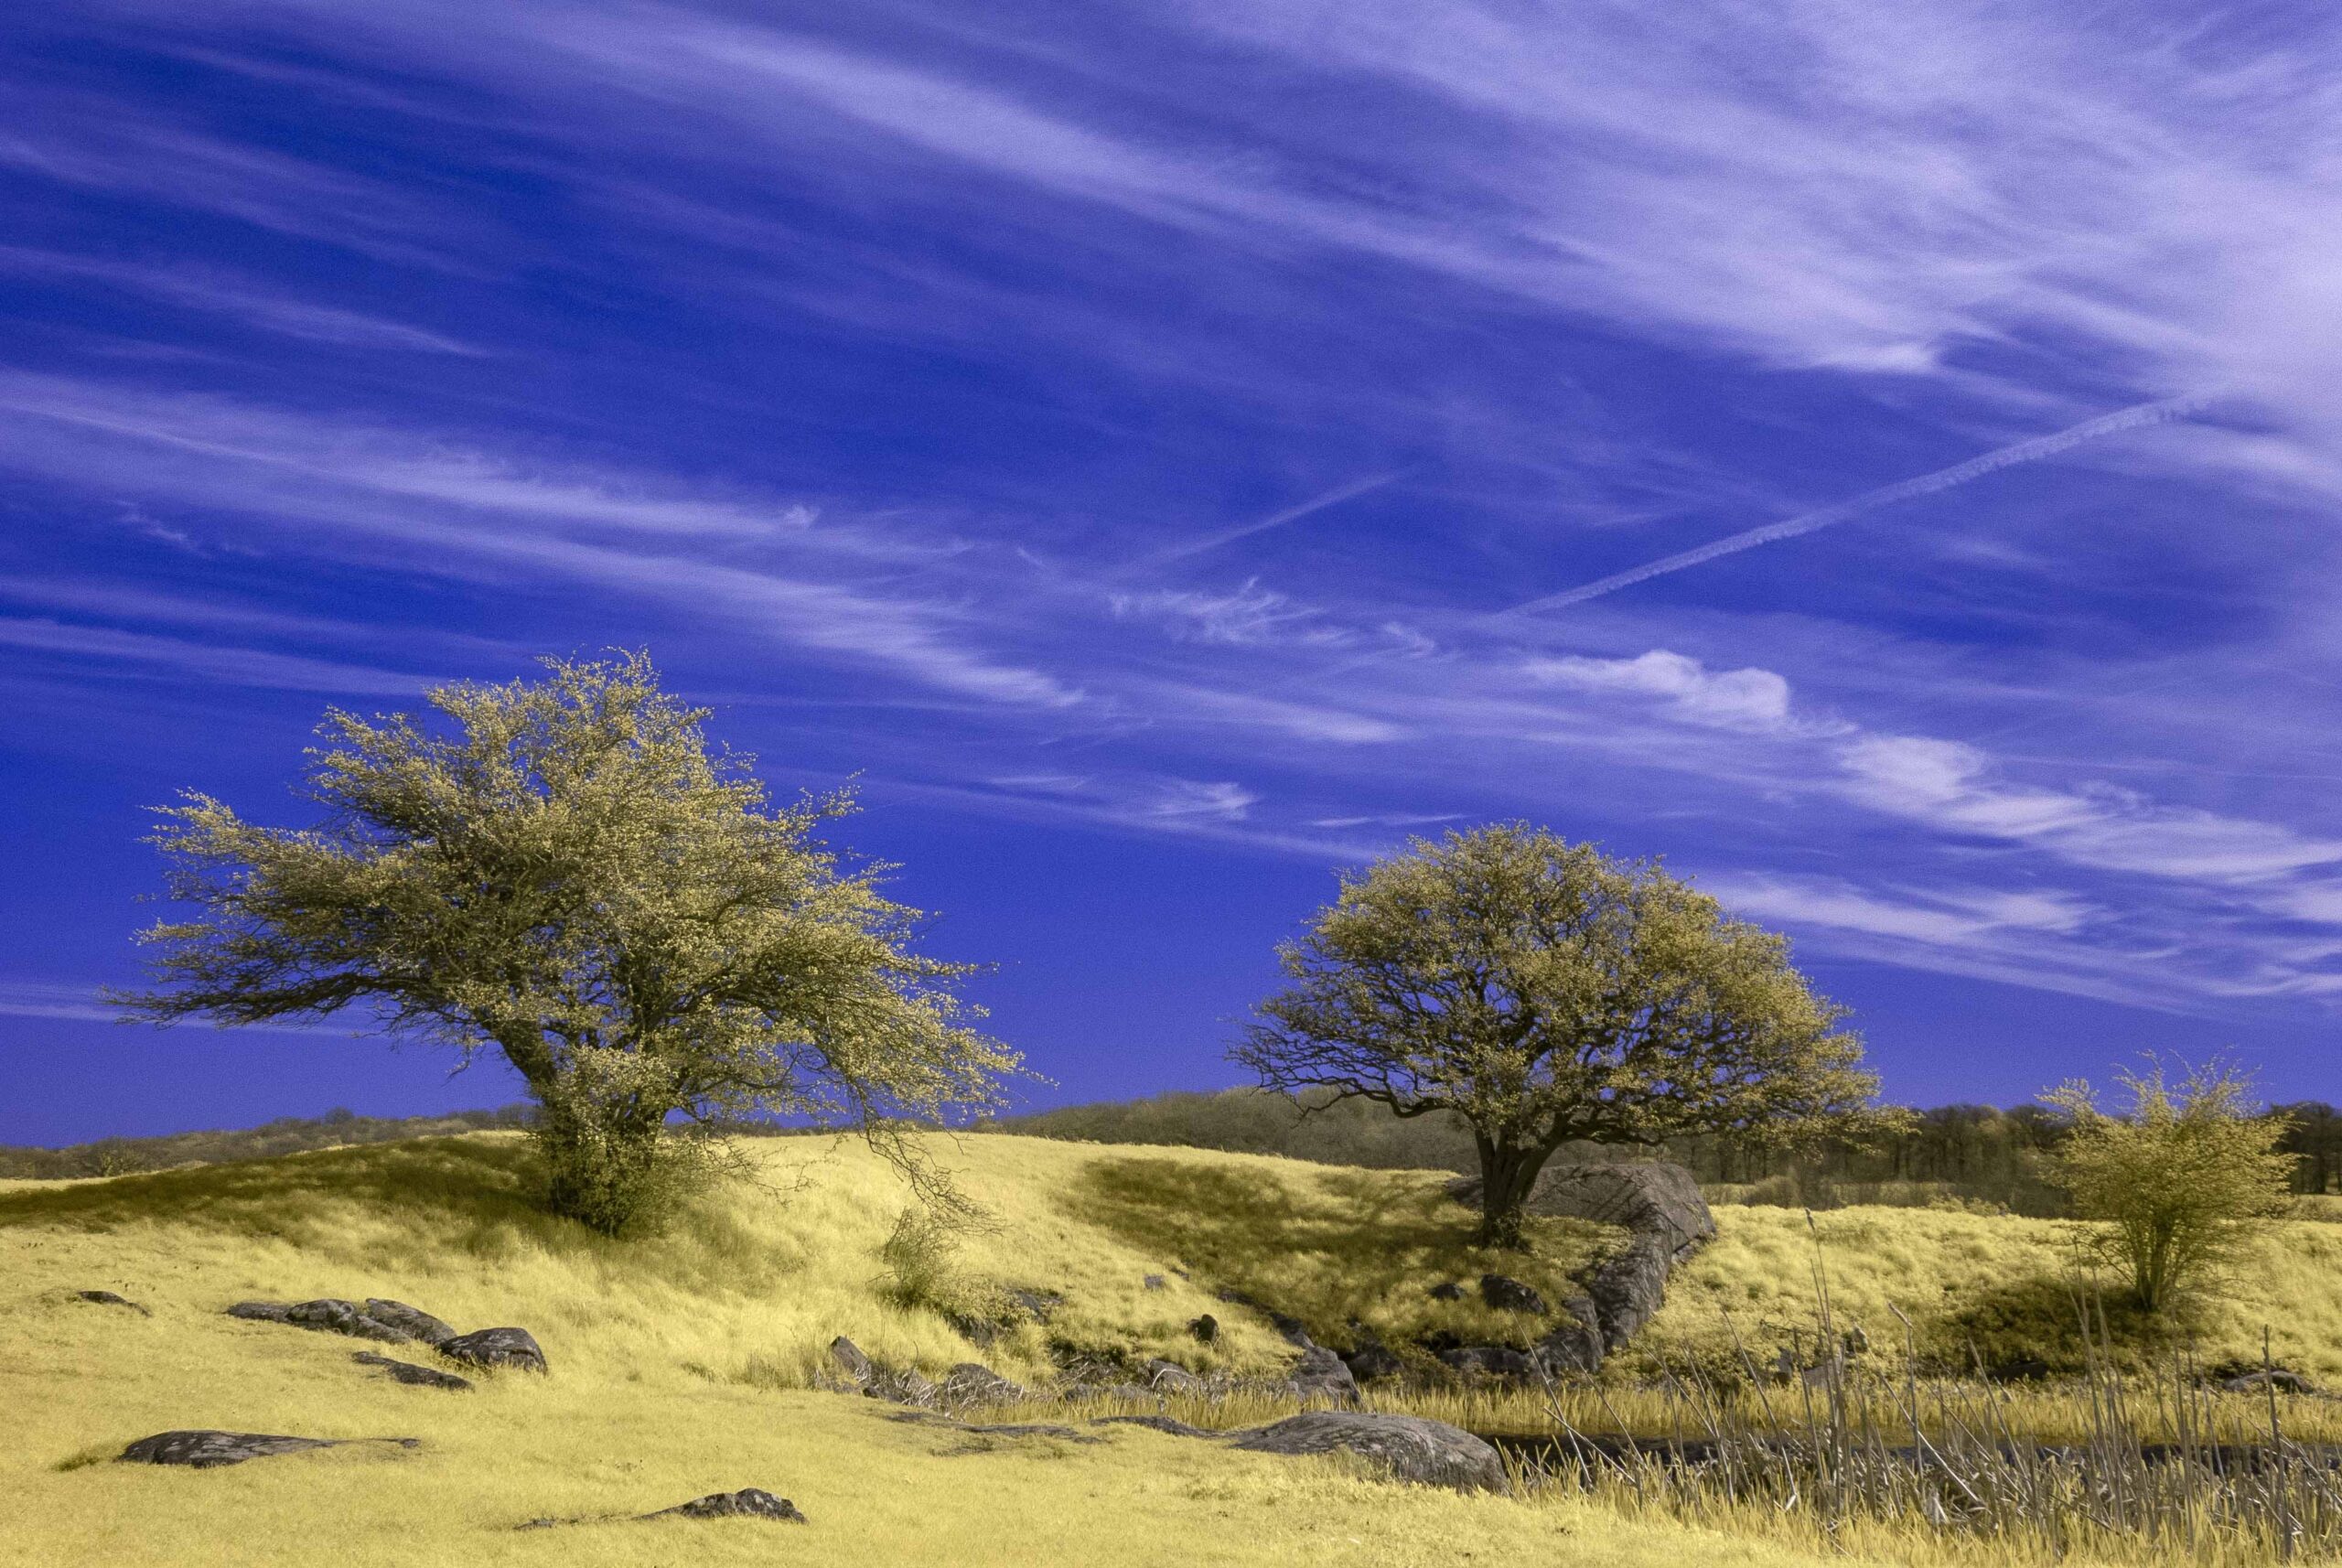 Infrarot-Foto in Farbe. Die Wiese wirkt wie vertrocknetes Gras.